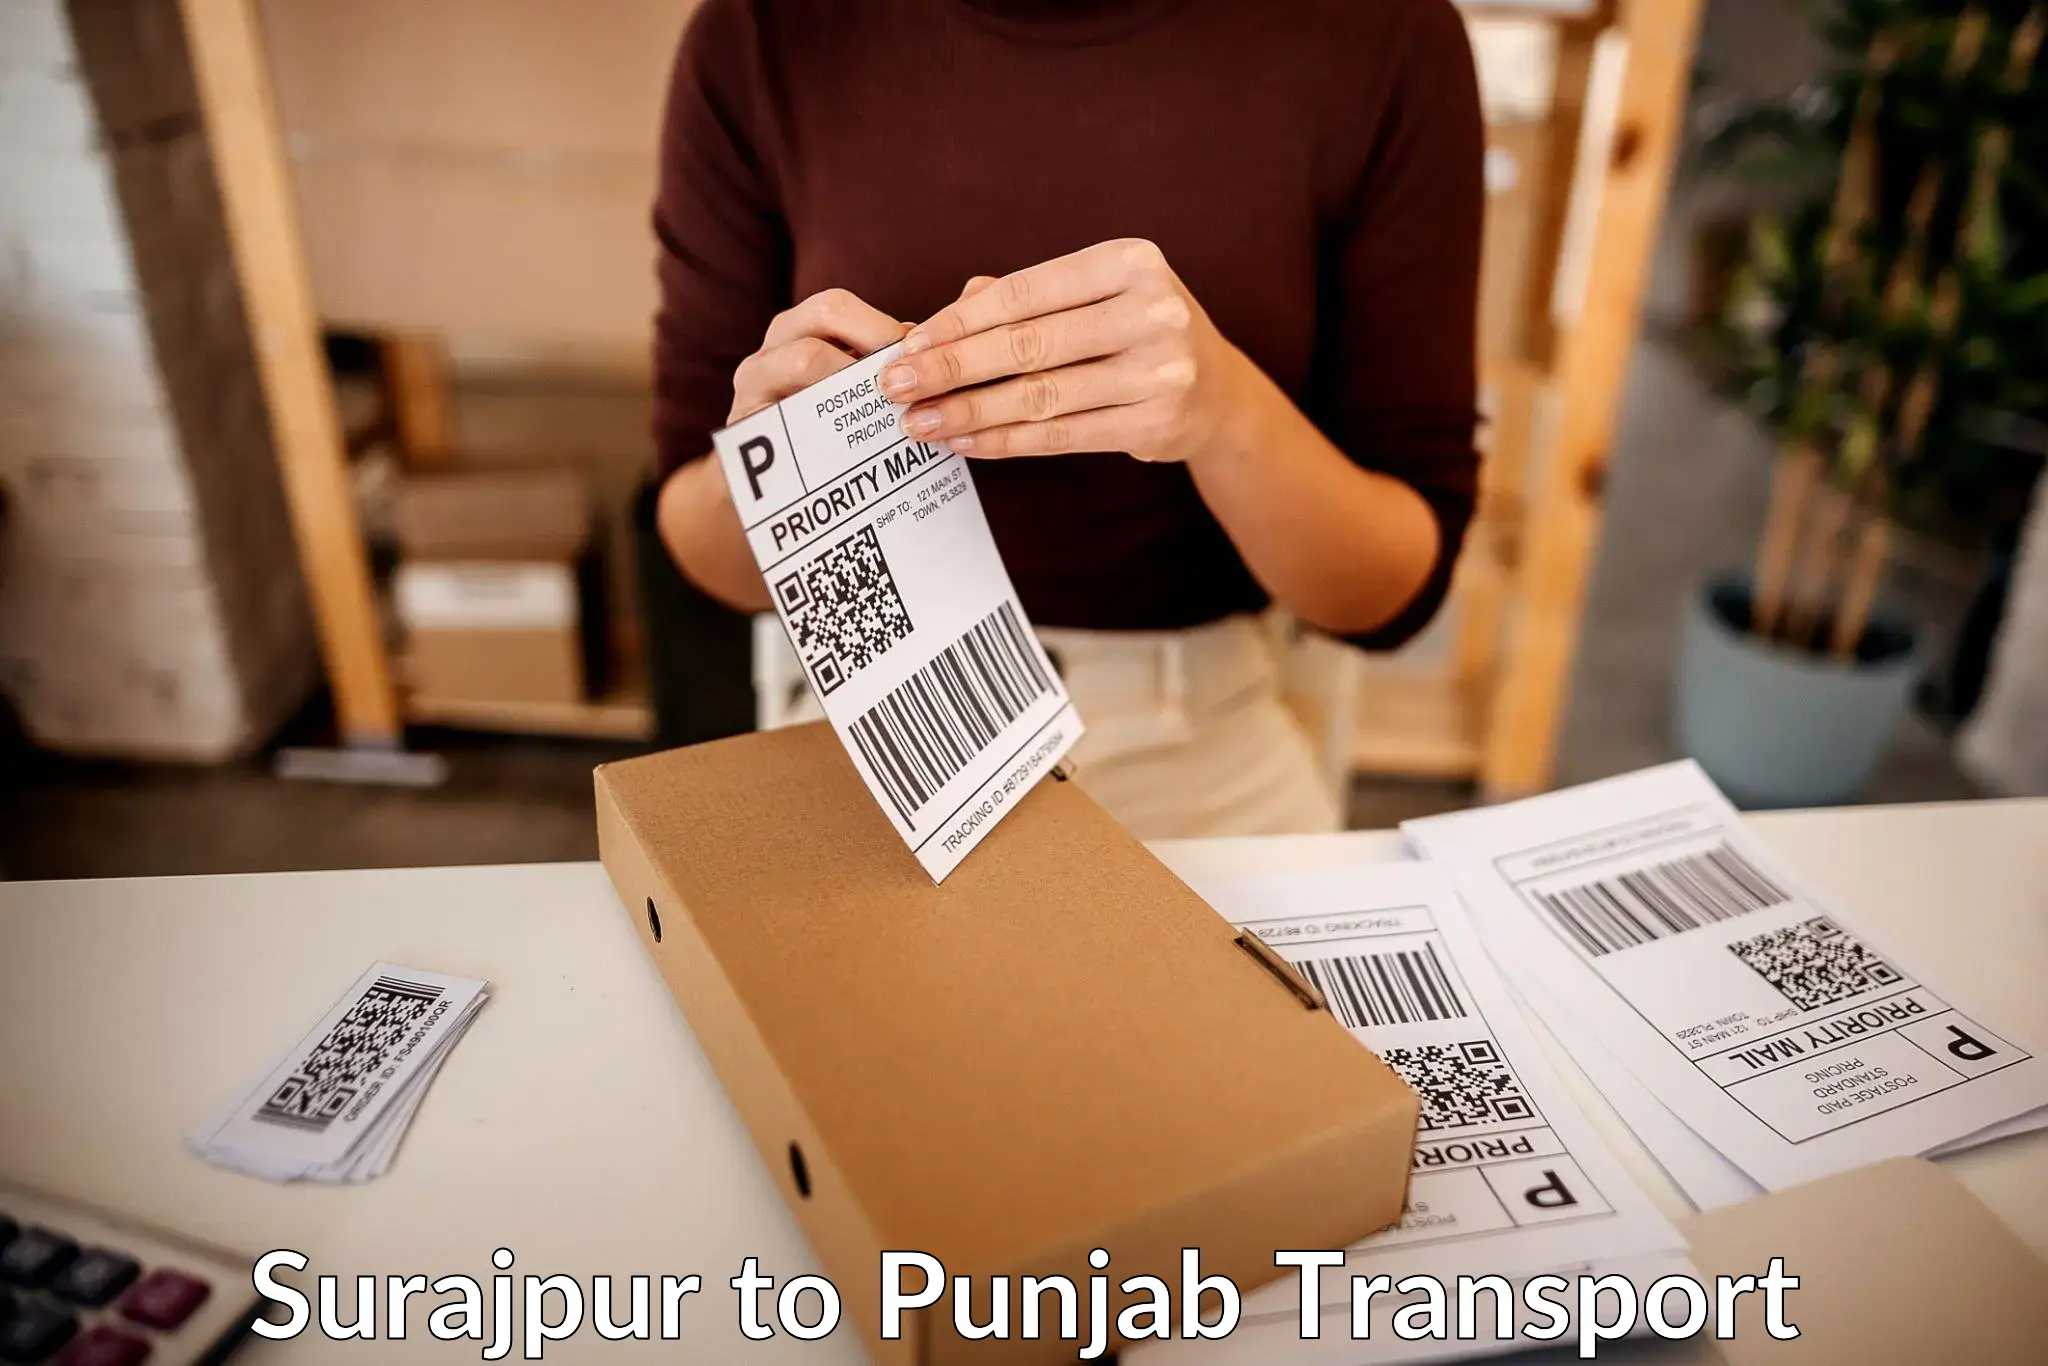 Online transport service Surajpur to Ropar